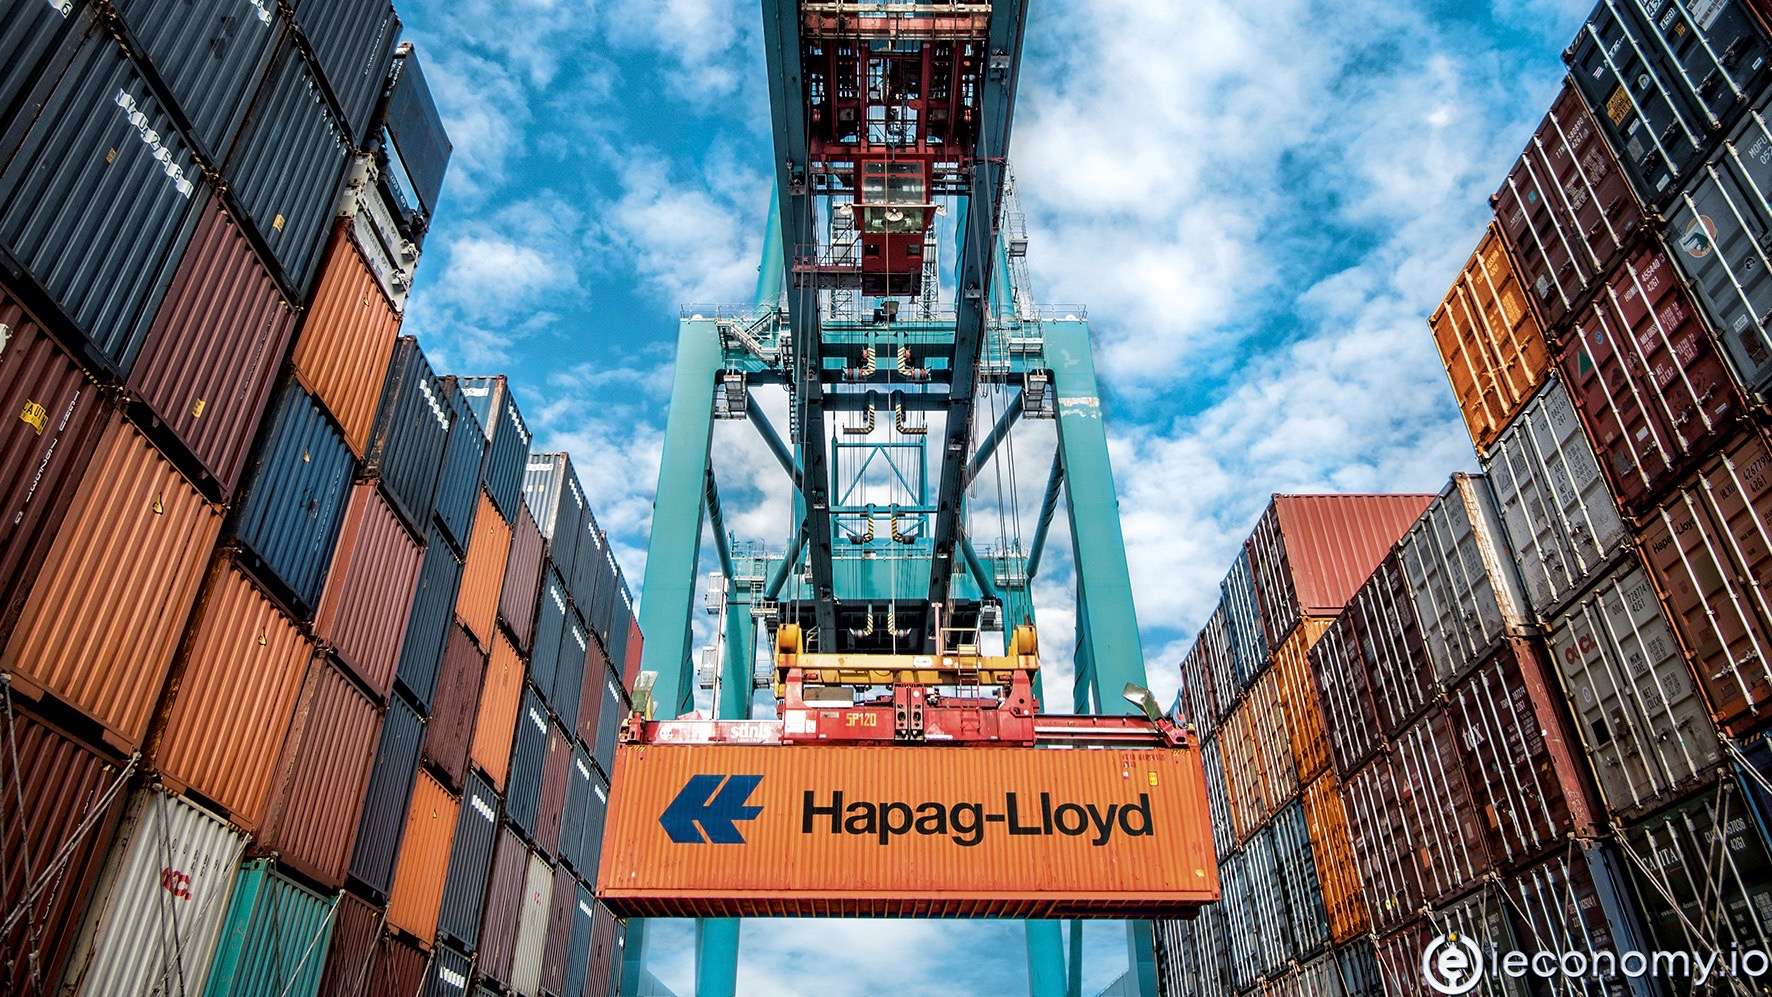 The Hamburg container shipping company Hapag-Lloyd increased its profit